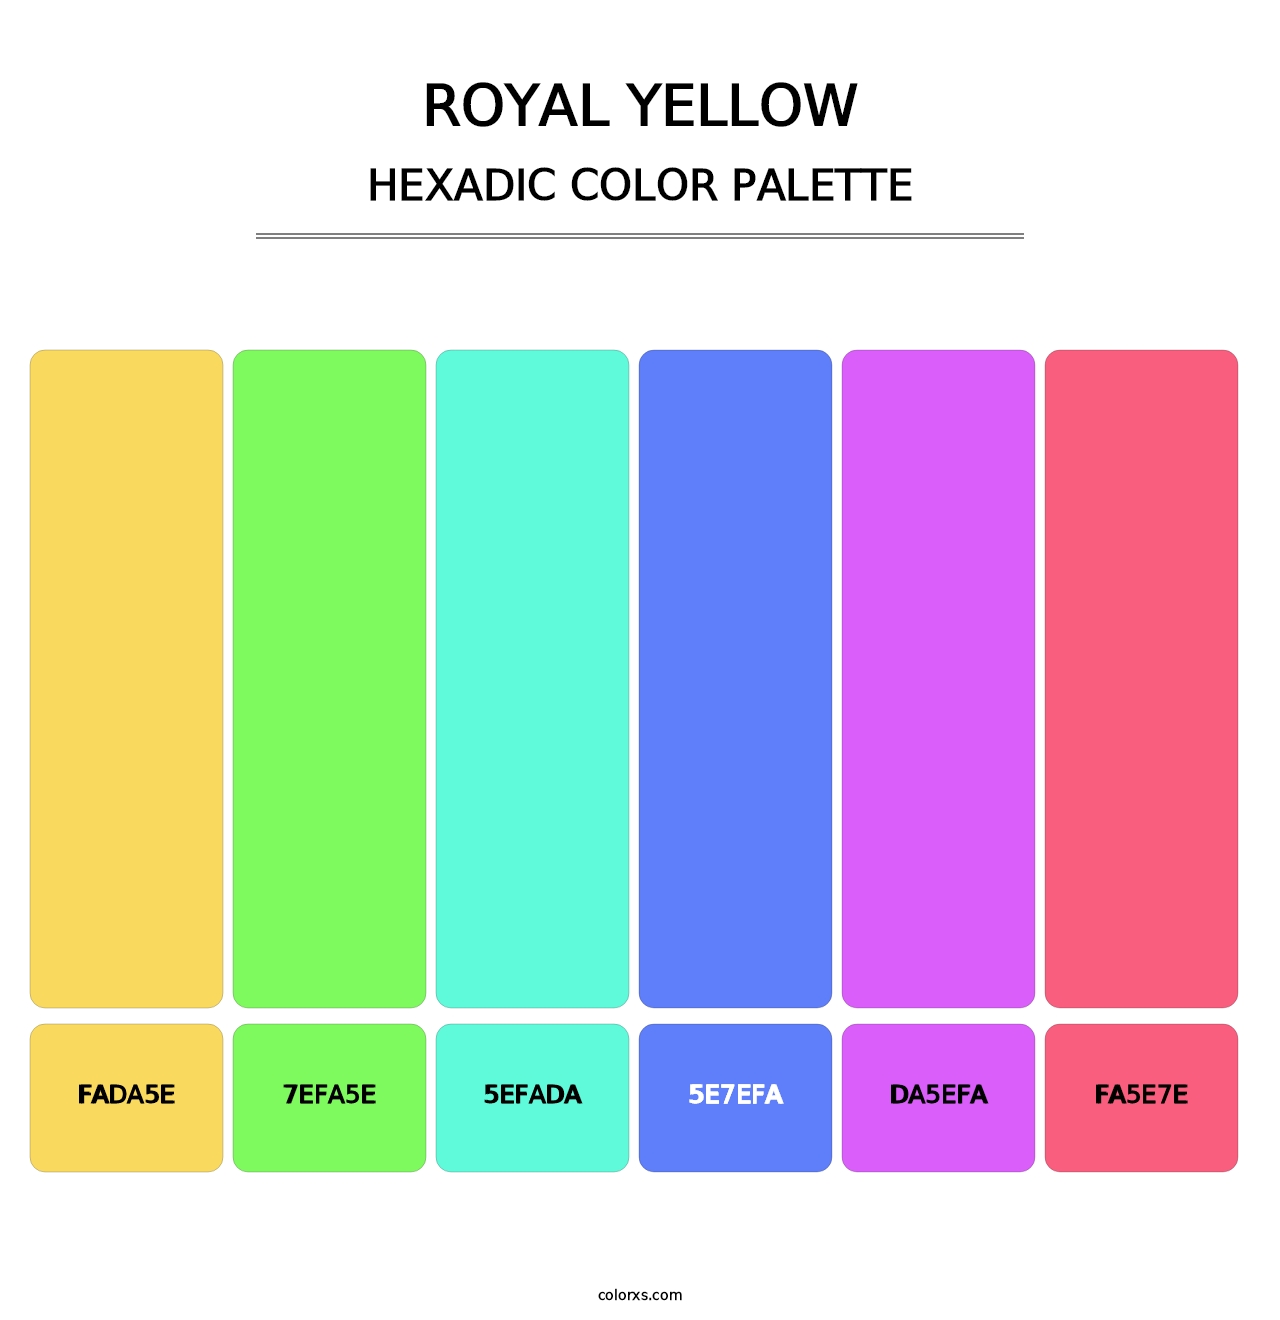 Royal Yellow - Hexadic Color Palette